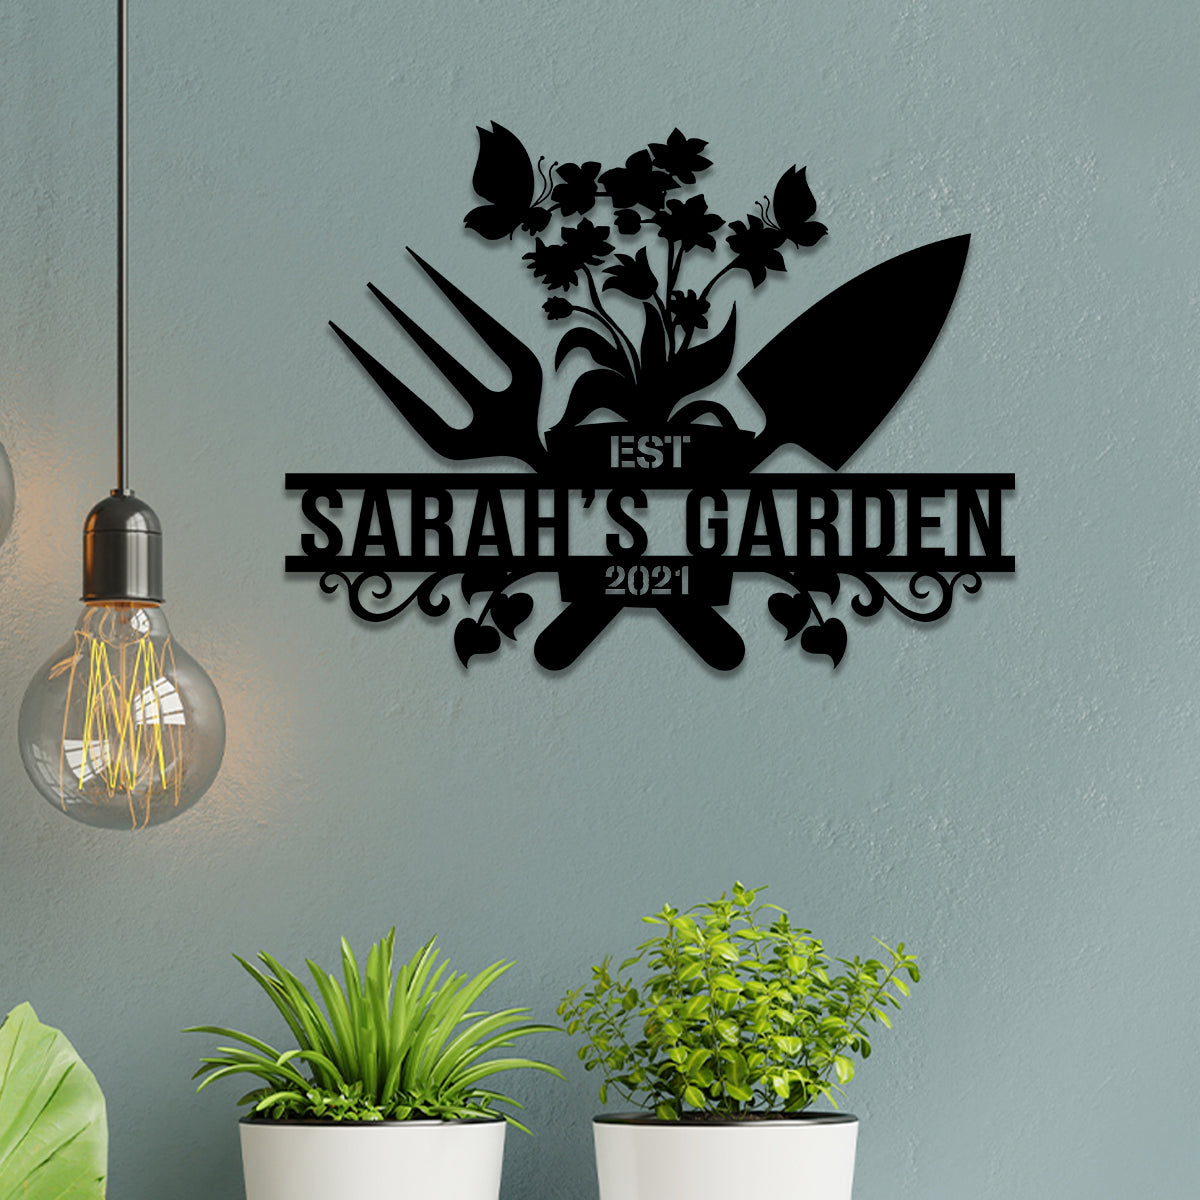 Personalized Metal Garden Sign, Garden Stake, Home Decor, Wedding Art Gift For Her, Gardening Lovers